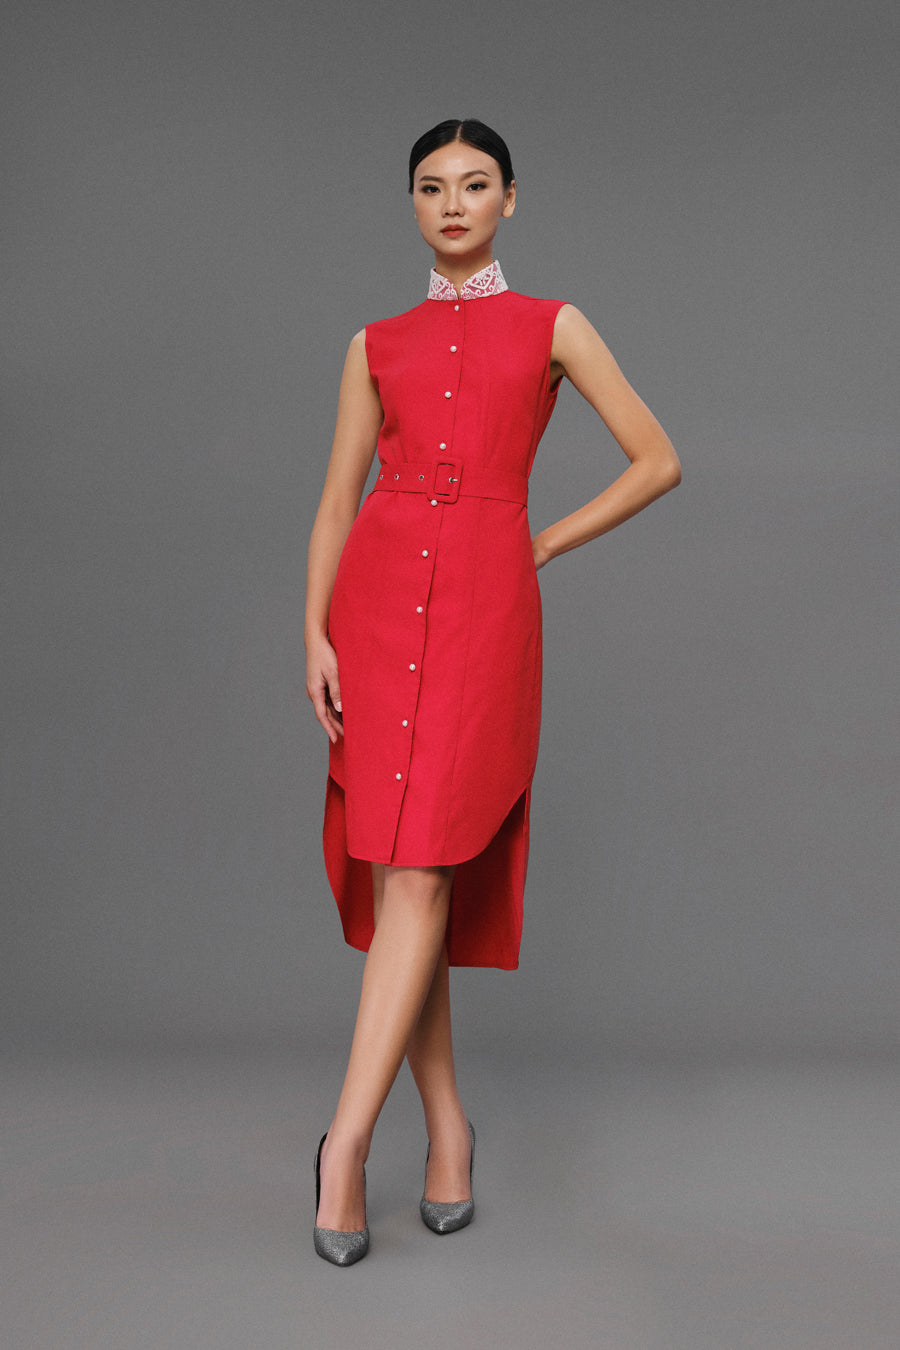 Poppy - Non Iron - Red Sleeveless Shirt Dress